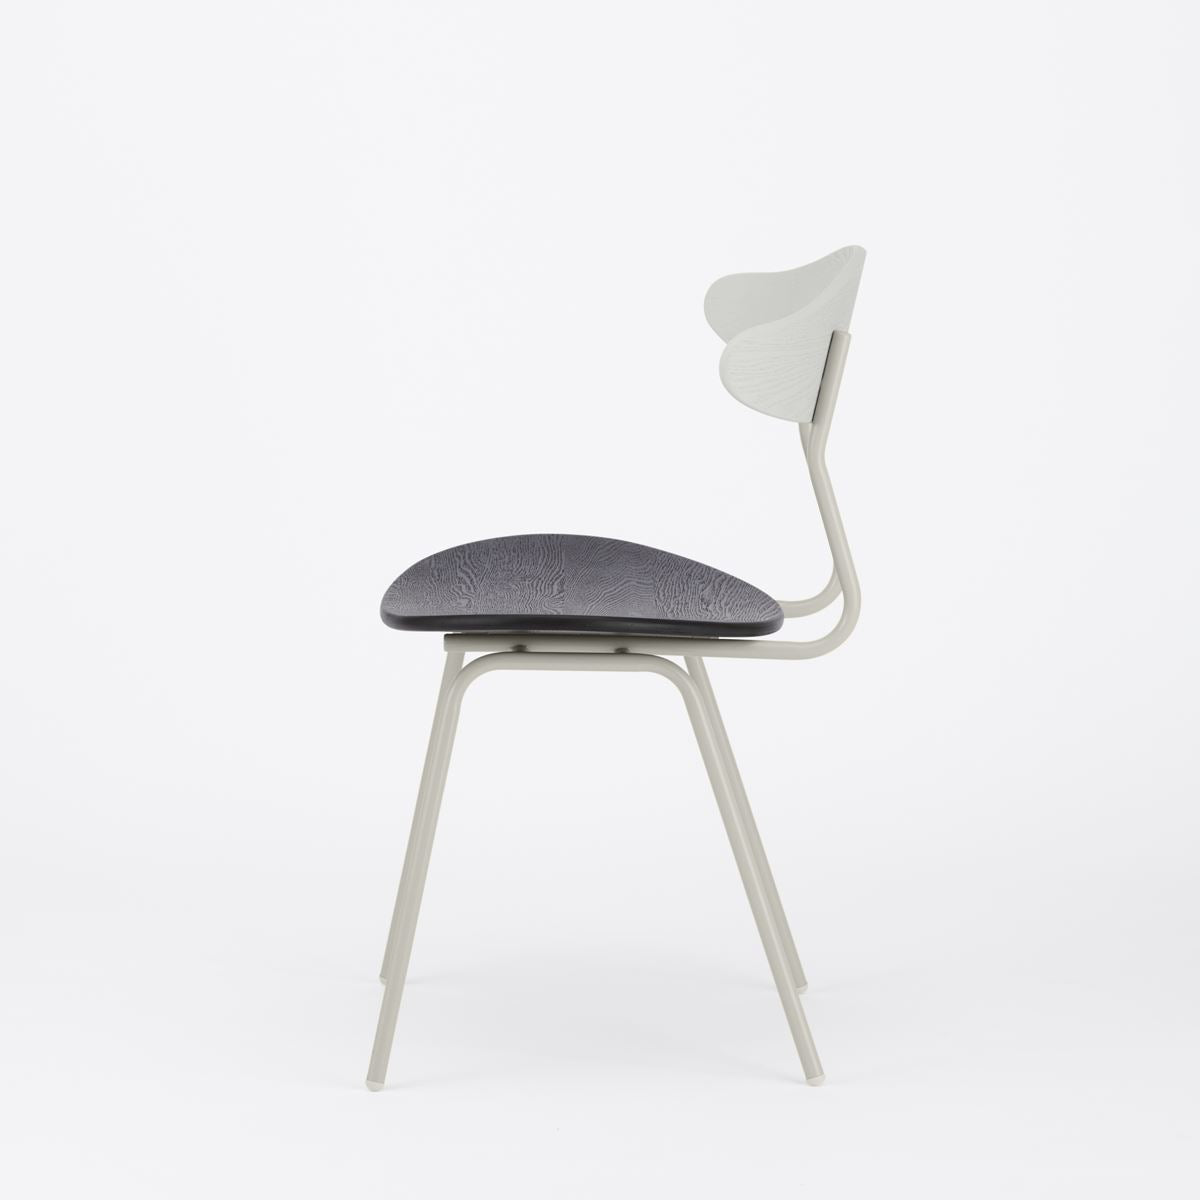 KUUM Chair kinoco - Gray x Rubber Black x Gray White Steel Frame / クーム チェア キノコ